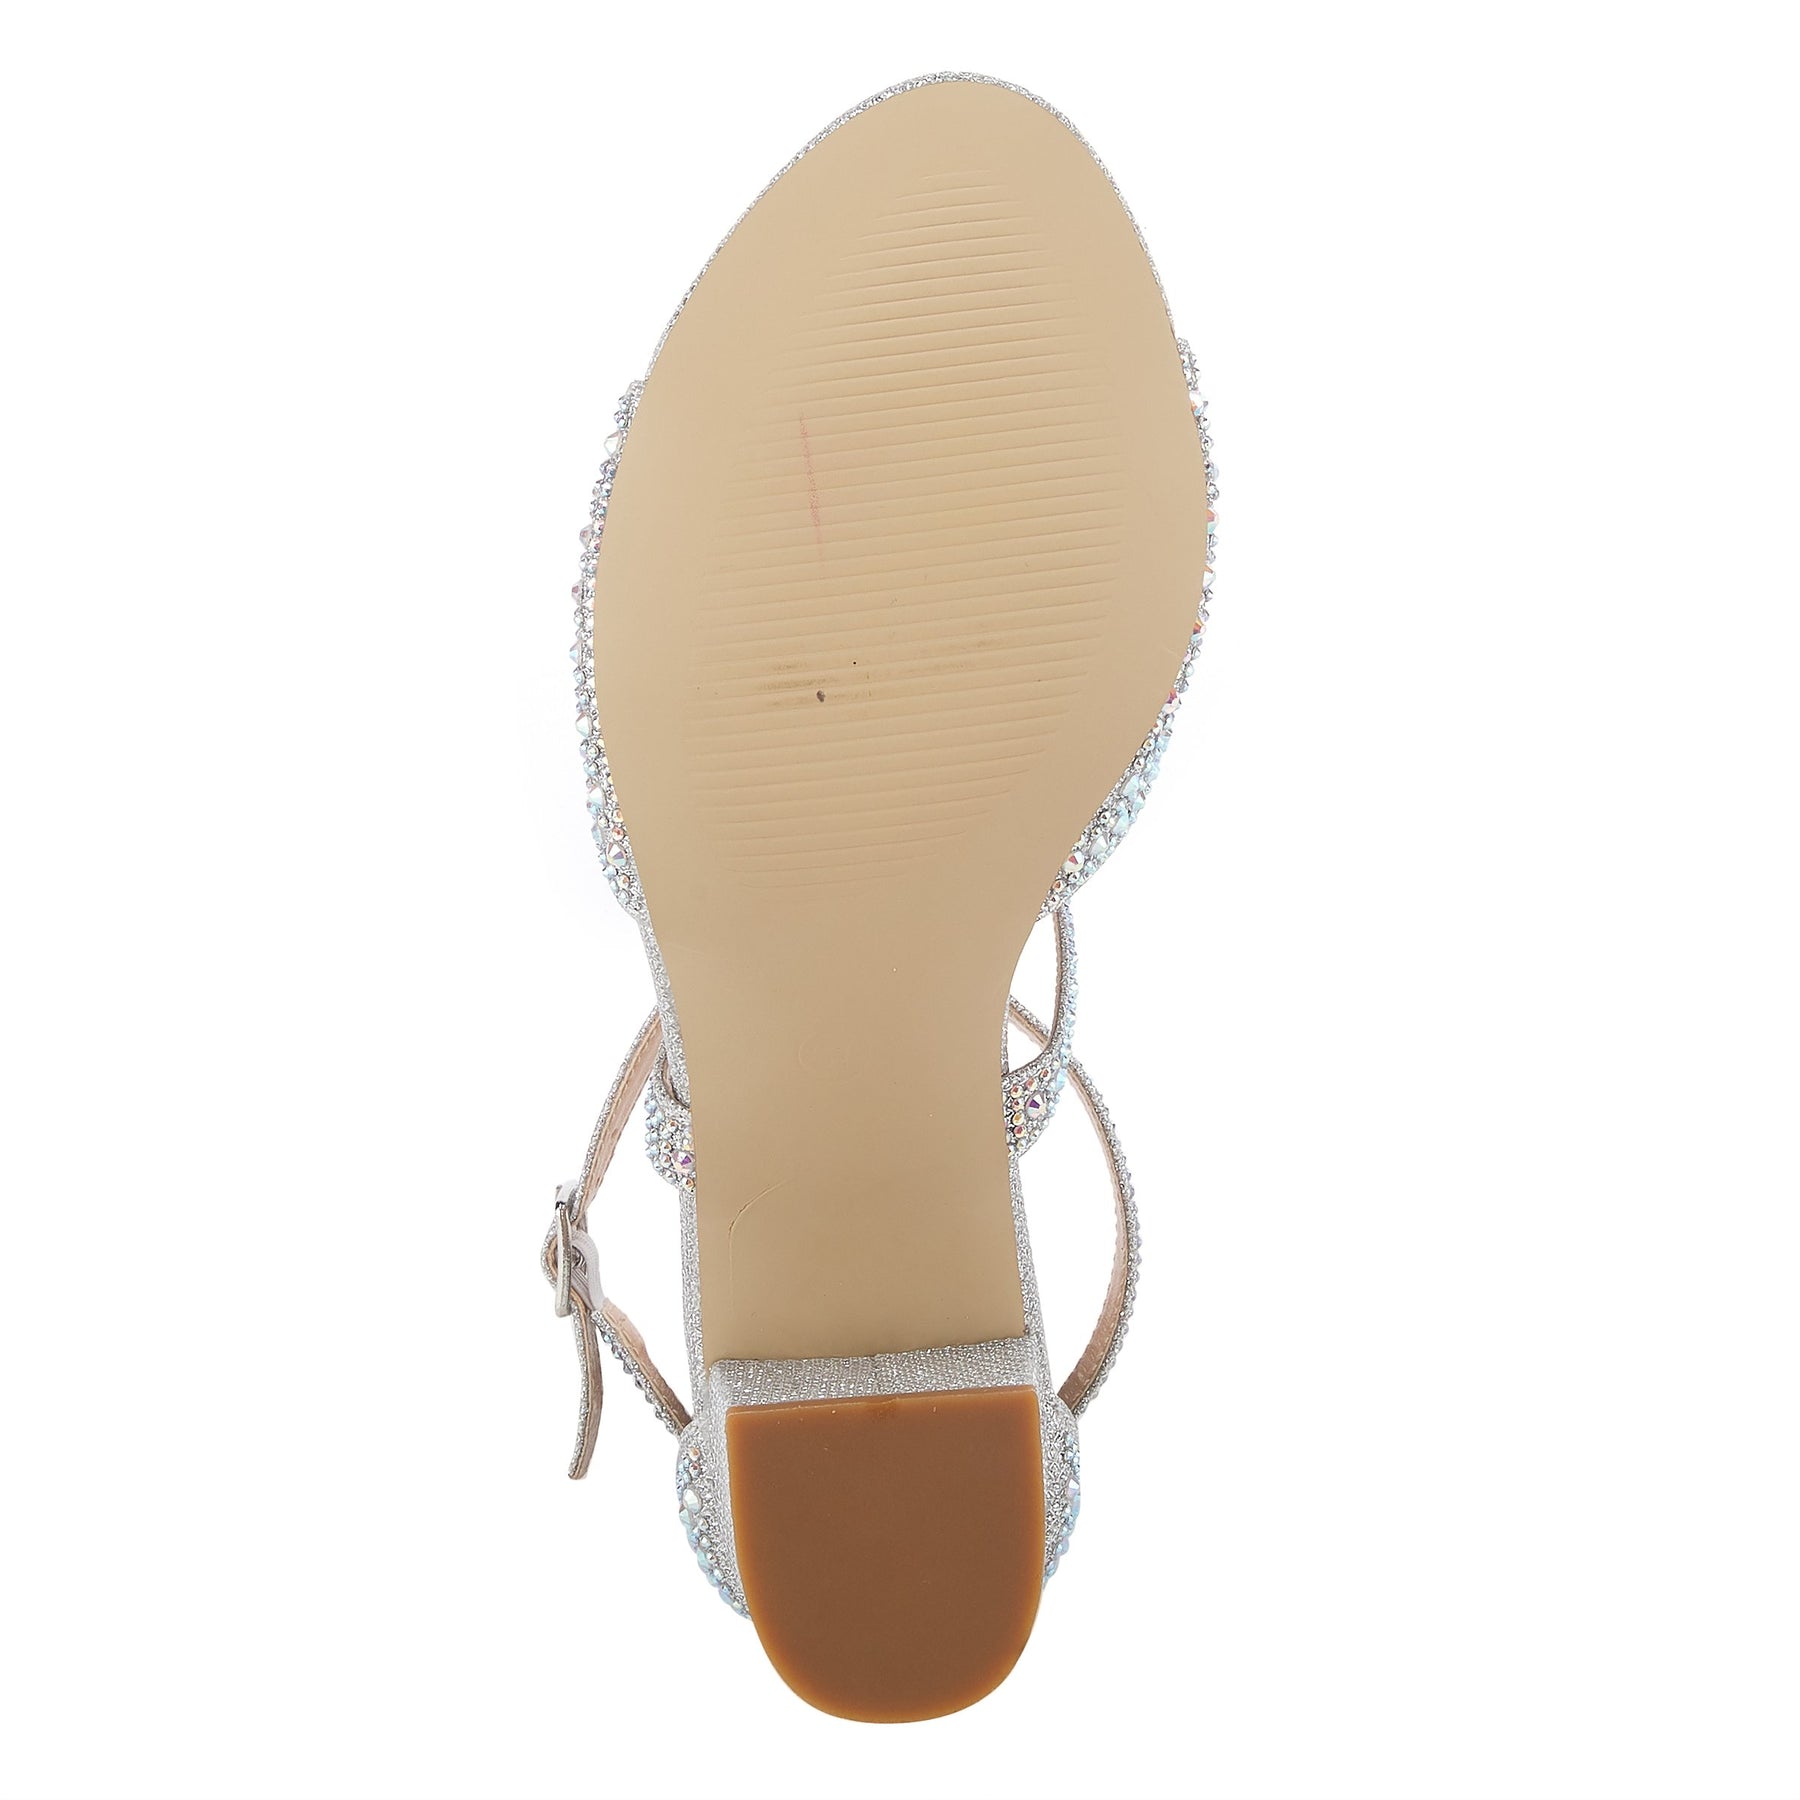 DELAMORE SANDAL by PATRIZIA – Spring Step Shoes